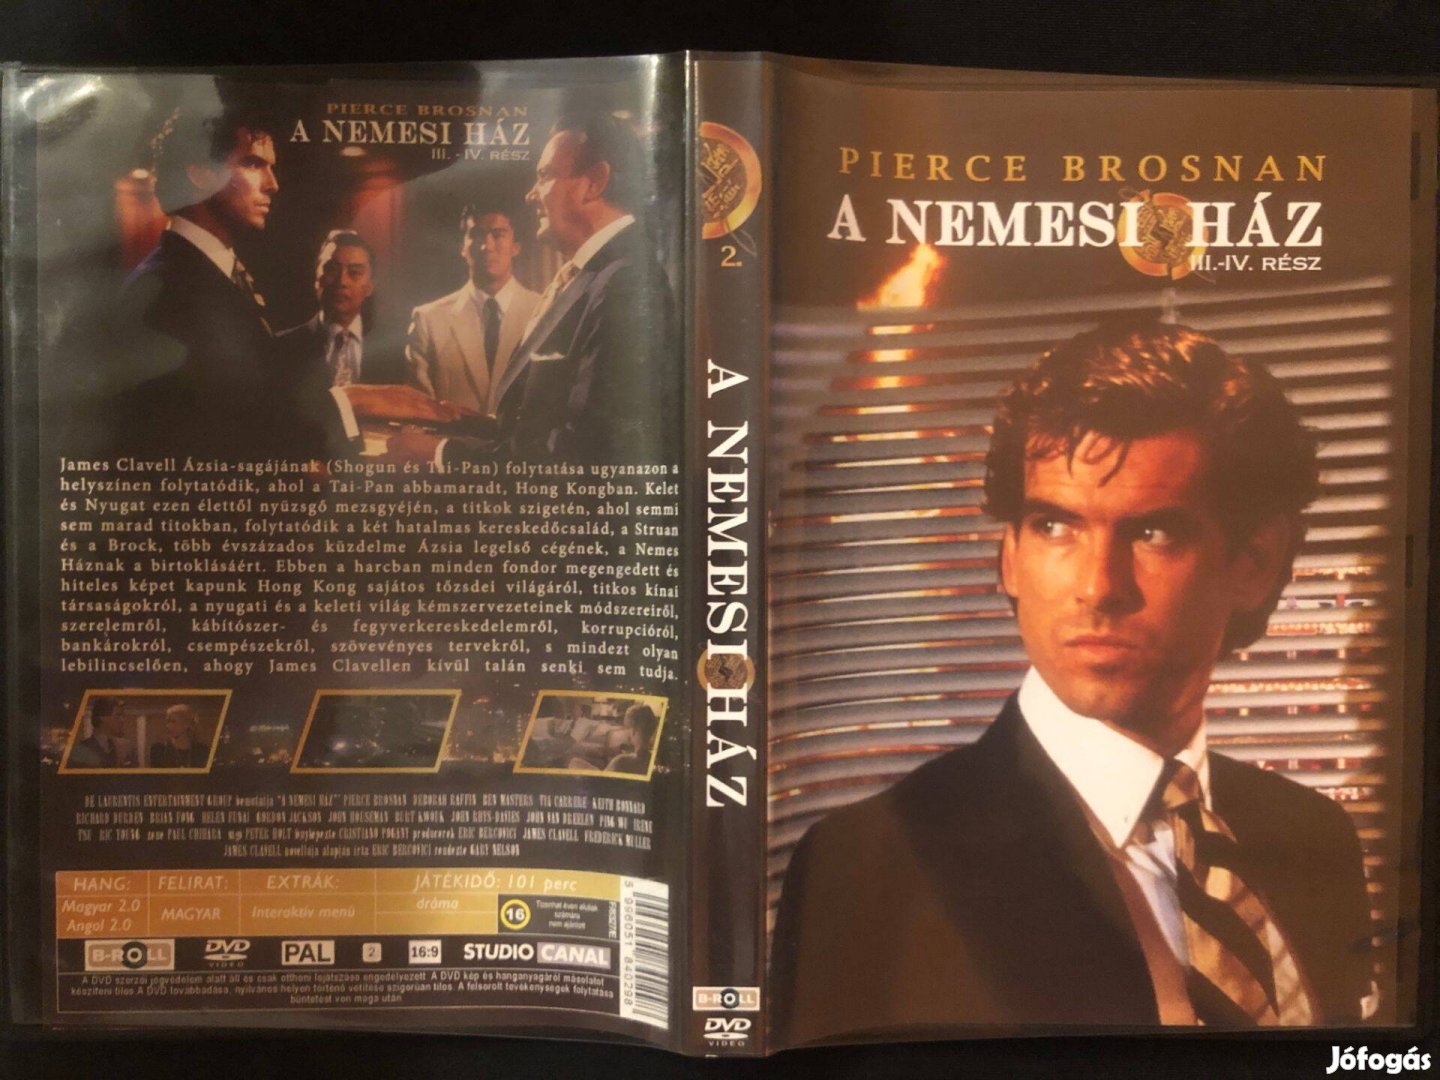 A nemesi ház DVD (karcmentes, Pierce Brosnan, Tia Carrere)